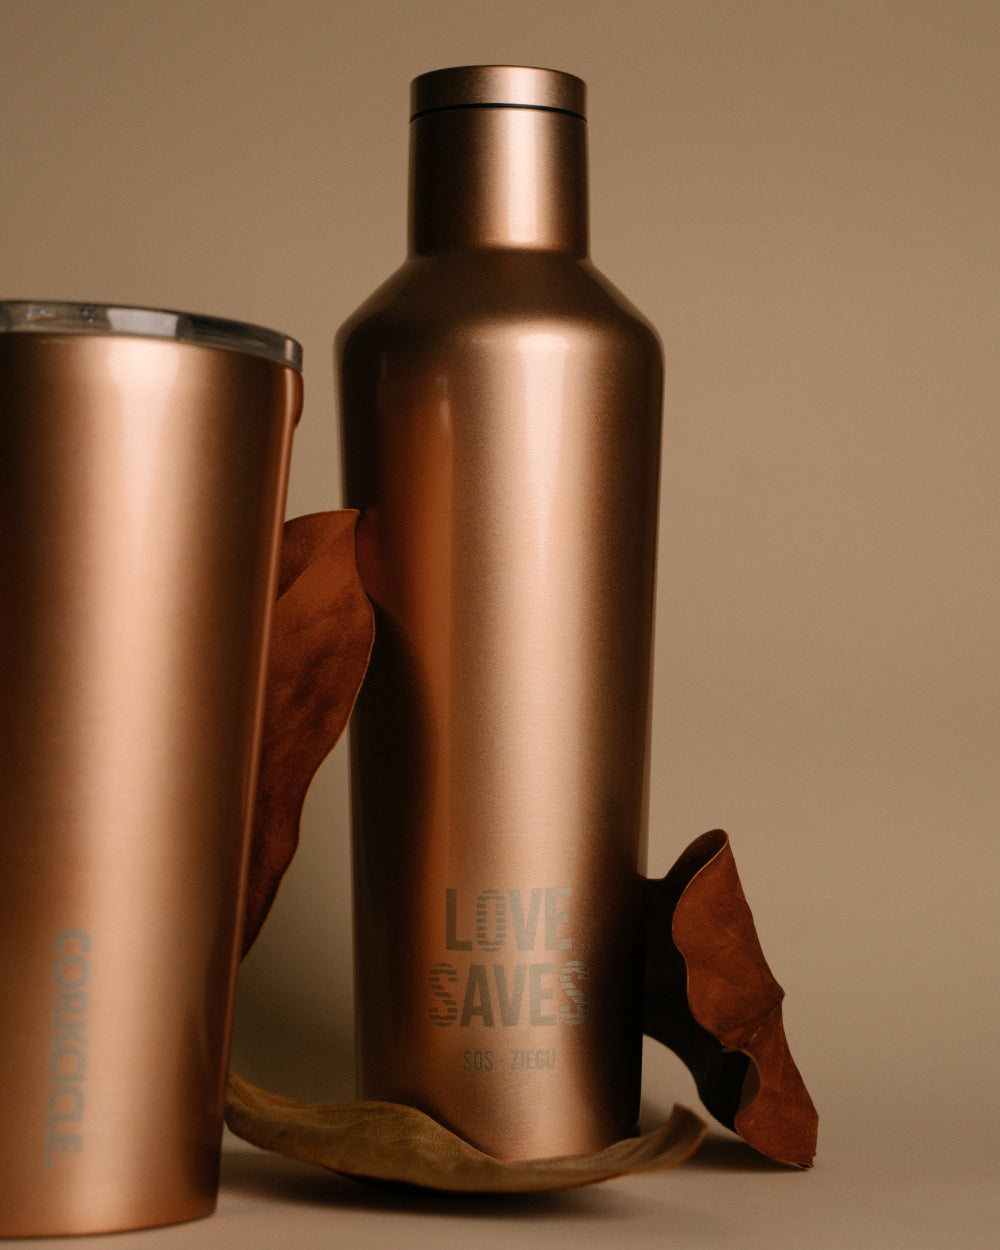 SOS Love Saves Canteen 16OZ Tumbler Water Bottle